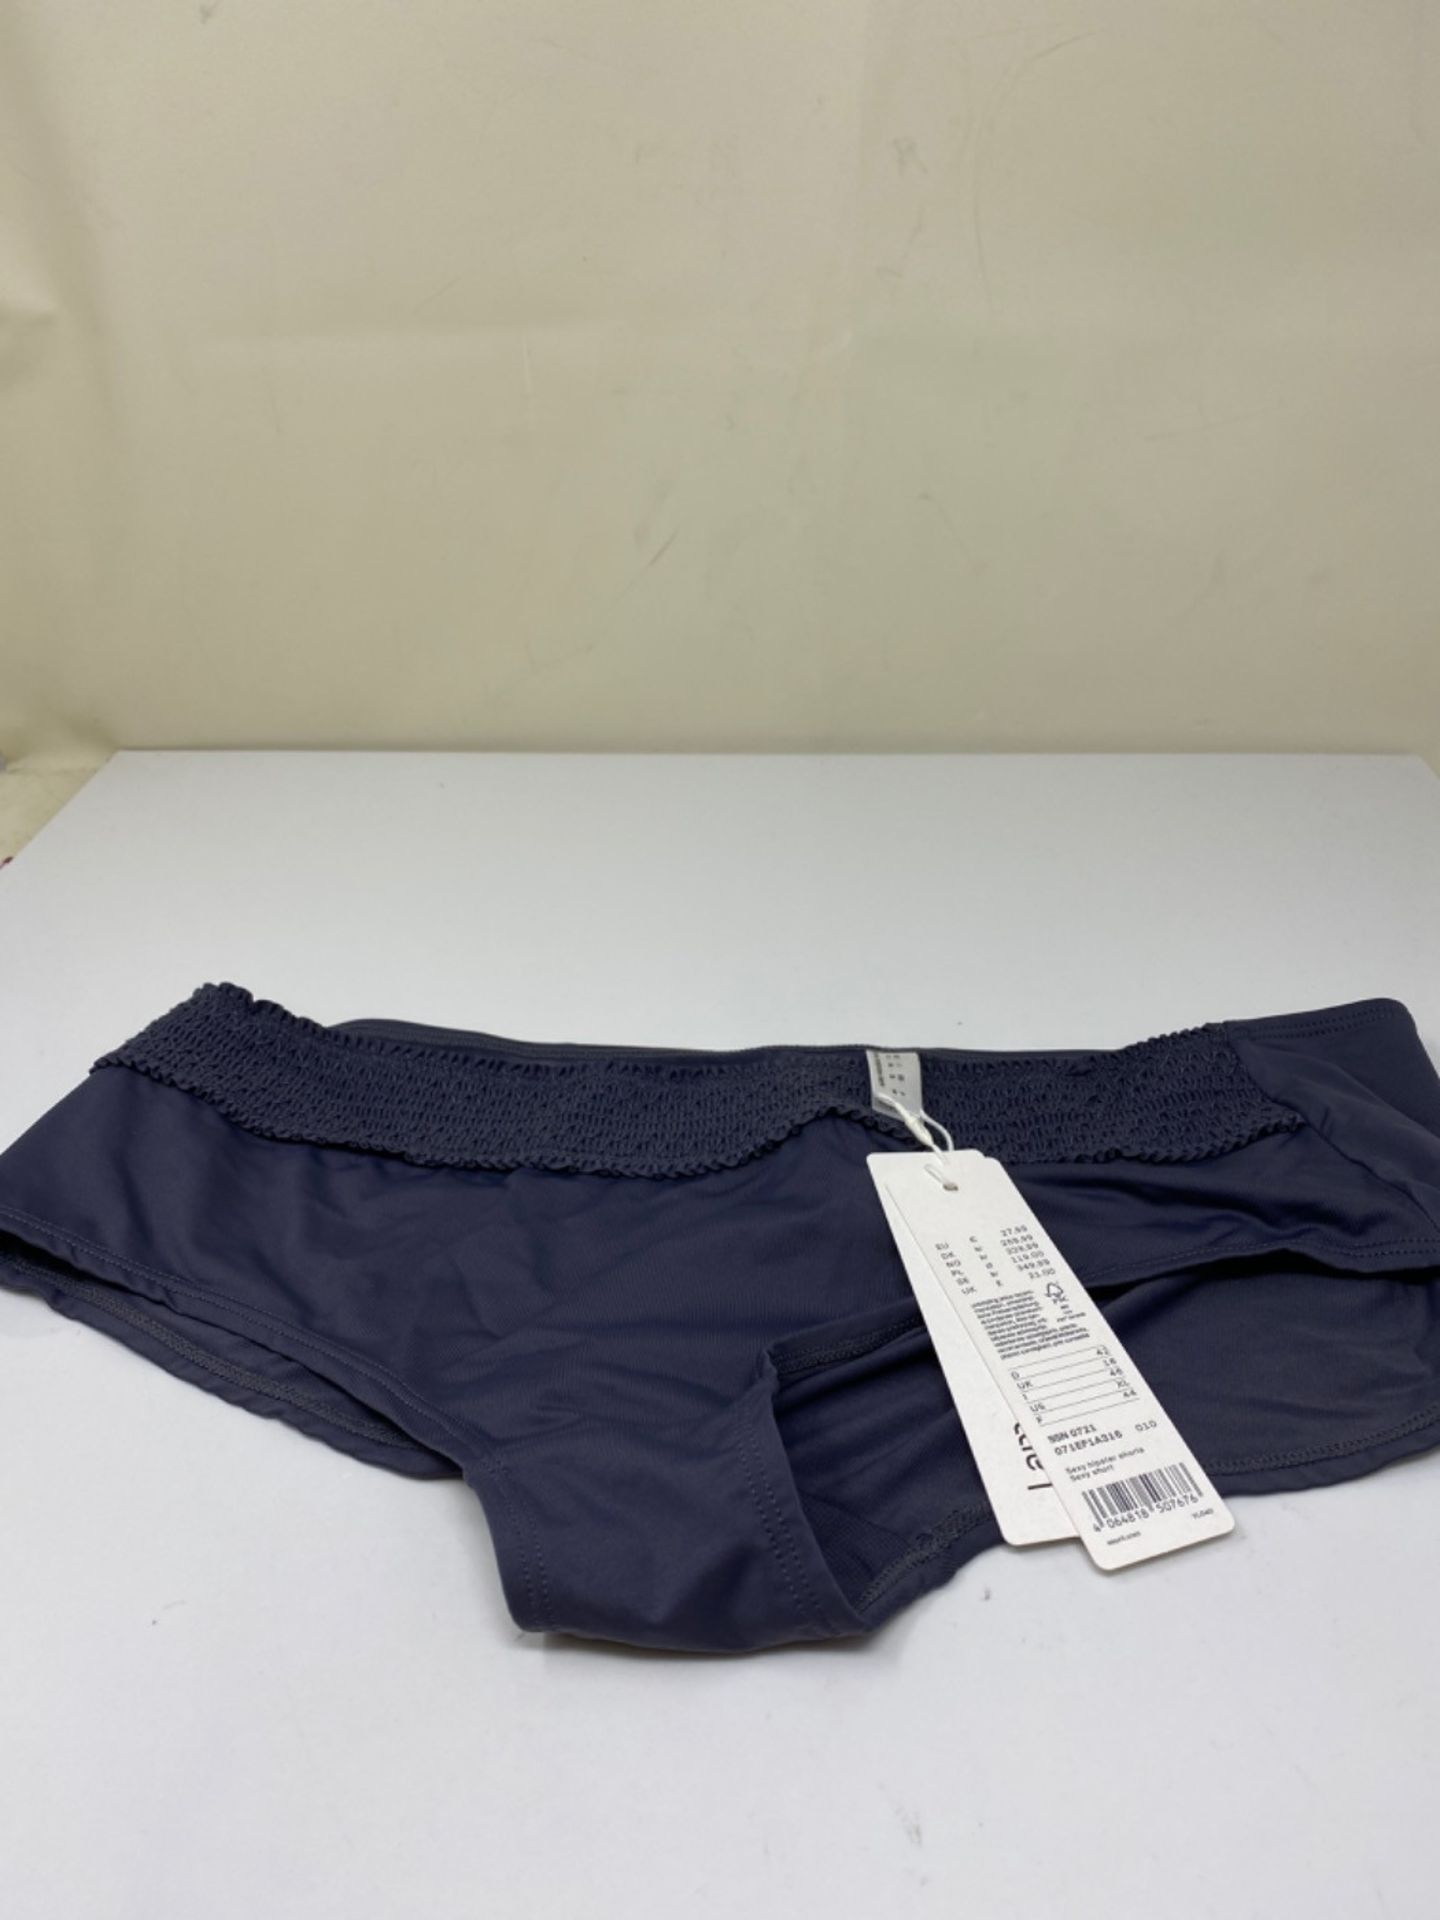 RRP £50.00 ESPRIT Women's Blue Beach NYR Sexy Hipster Shorts Bikini Bottoms, 10, 12 - Image 2 of 3